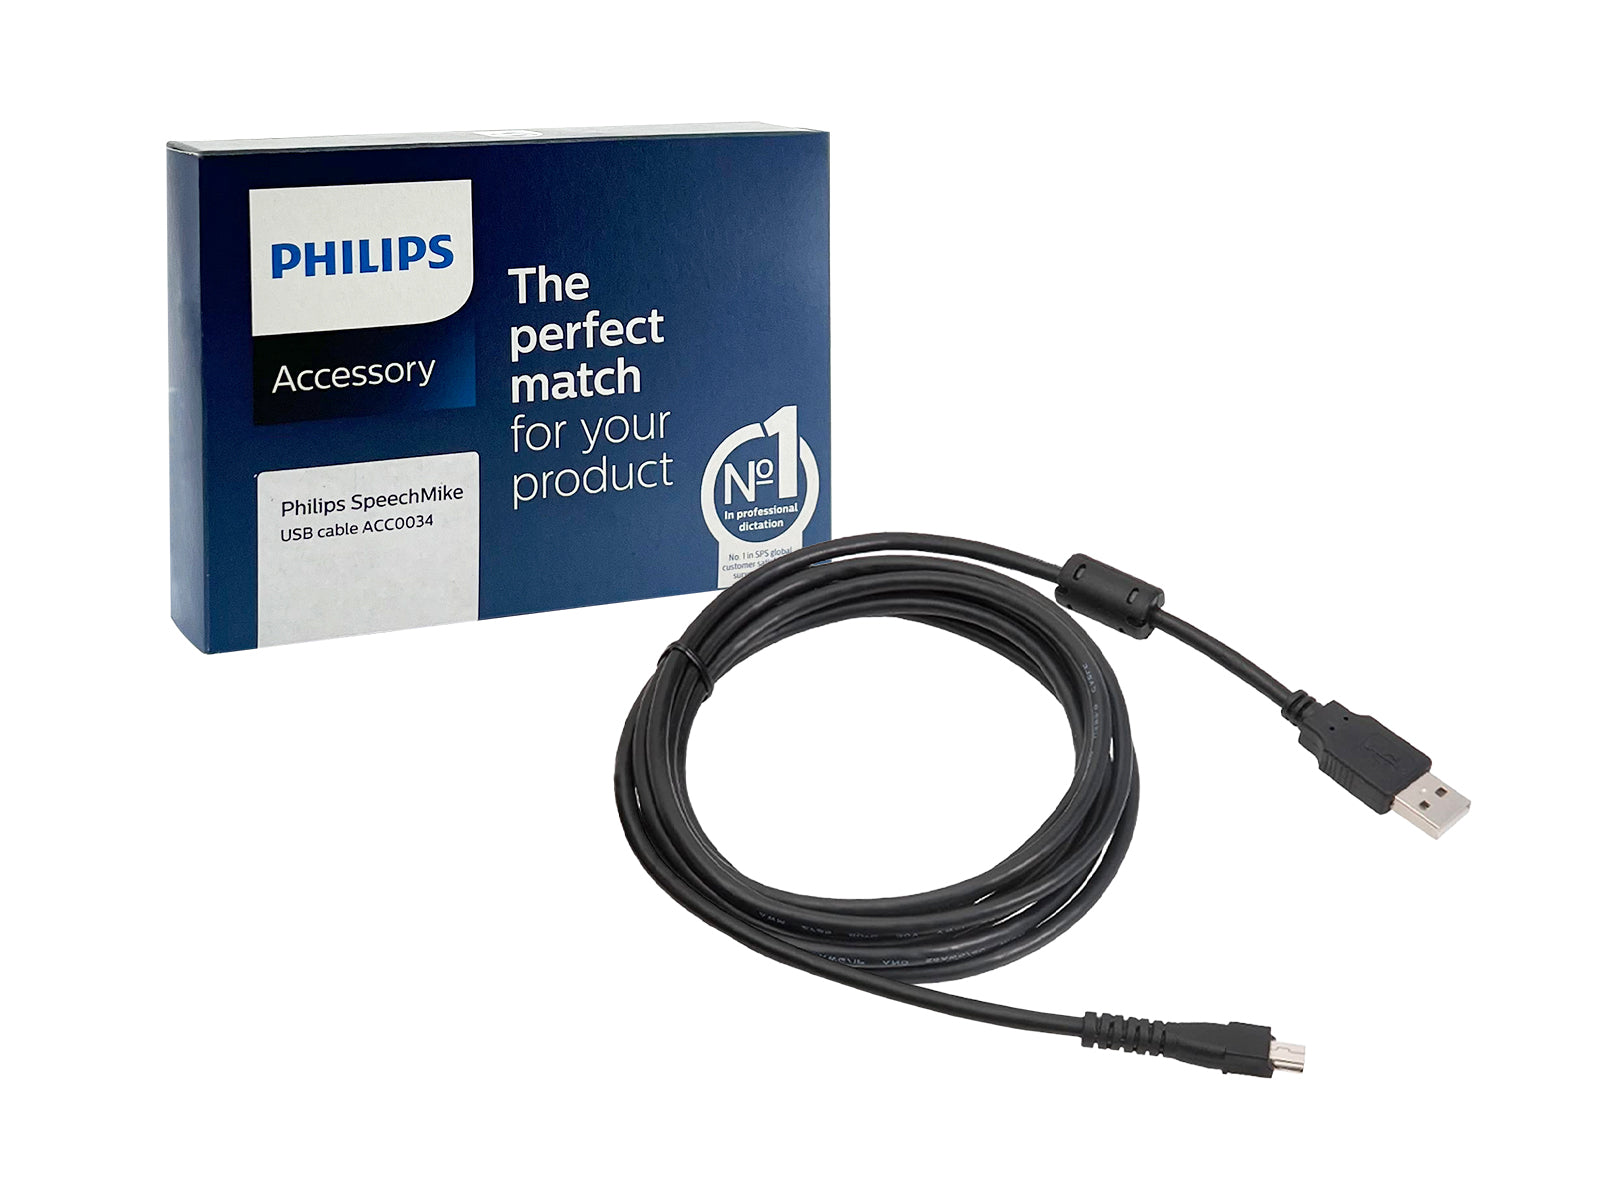 Philips Ersatz-USB-Kabel für Speechmike-Mikrofone – 8 m | 2.4 m (ACC0034) Monitors.com